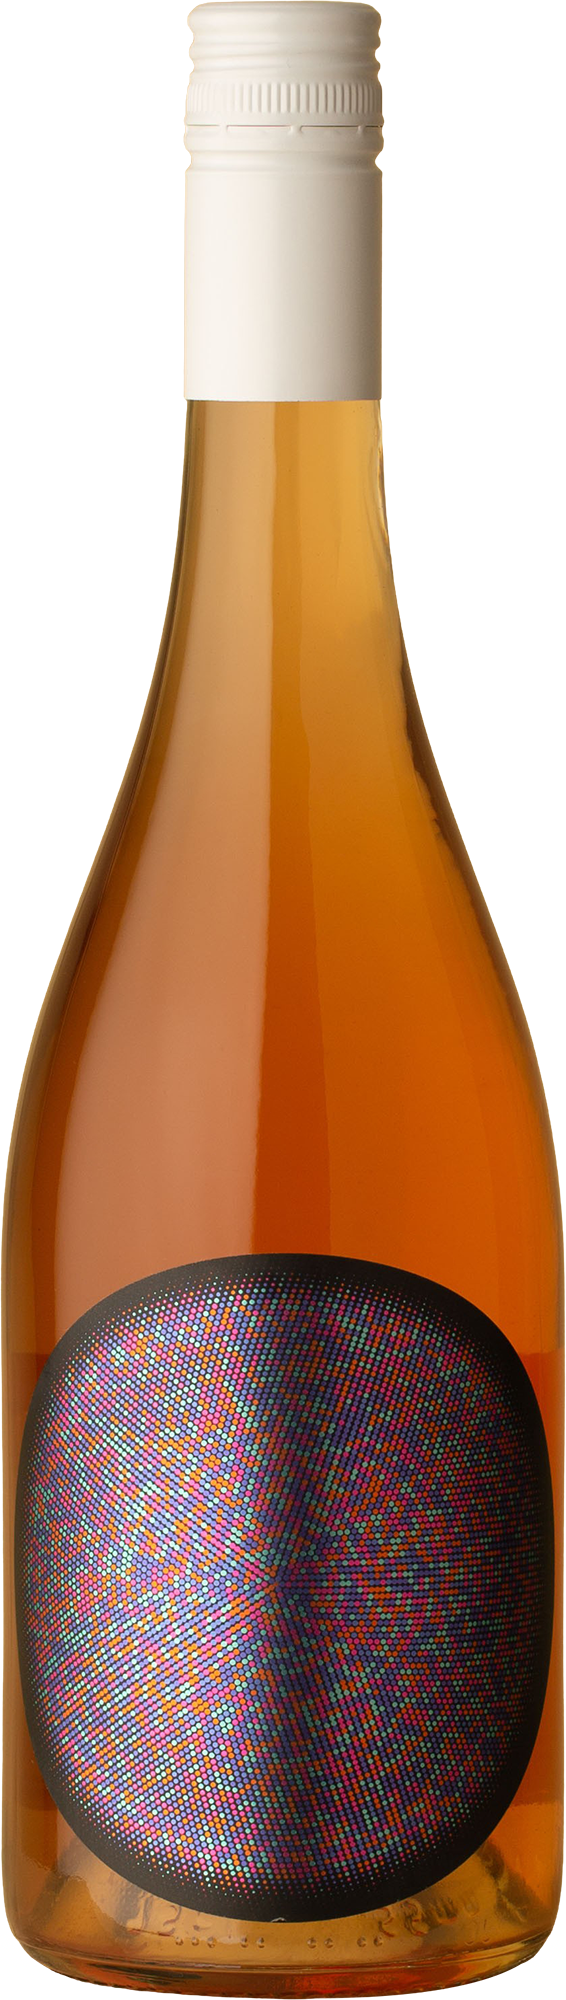 Aller Trop Loin - Energy Flash Chardonnay / Pinot Gris 2021 Orange Wine